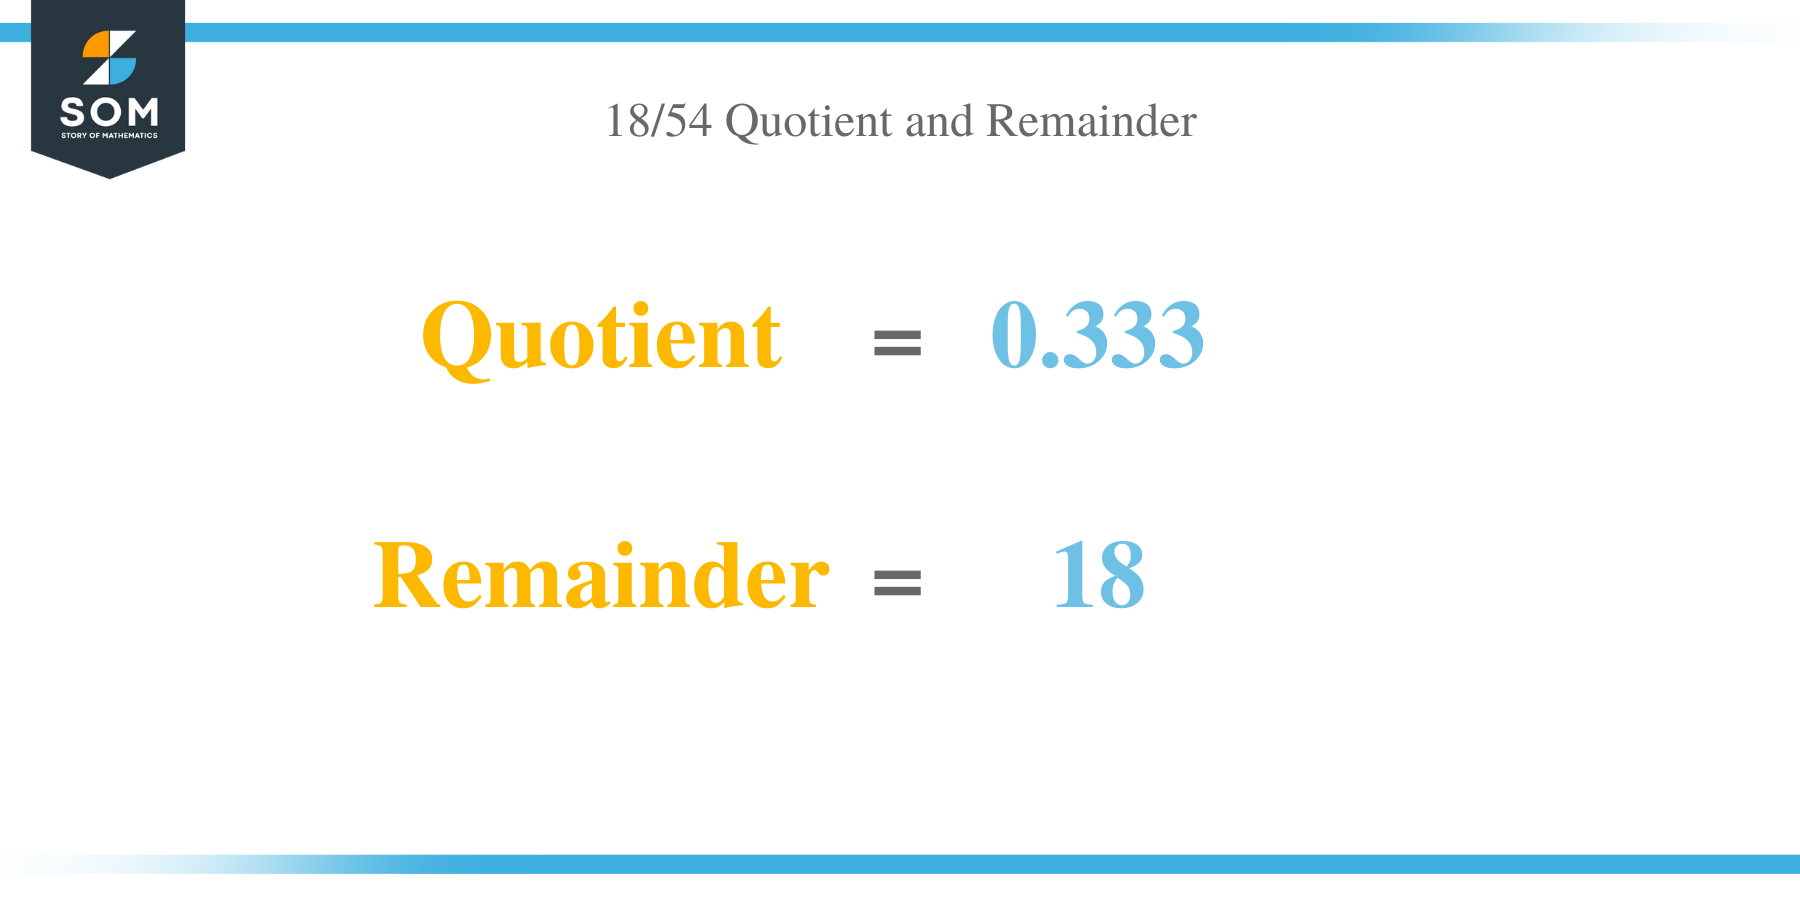 Quotient and Remainder of 18 per 54